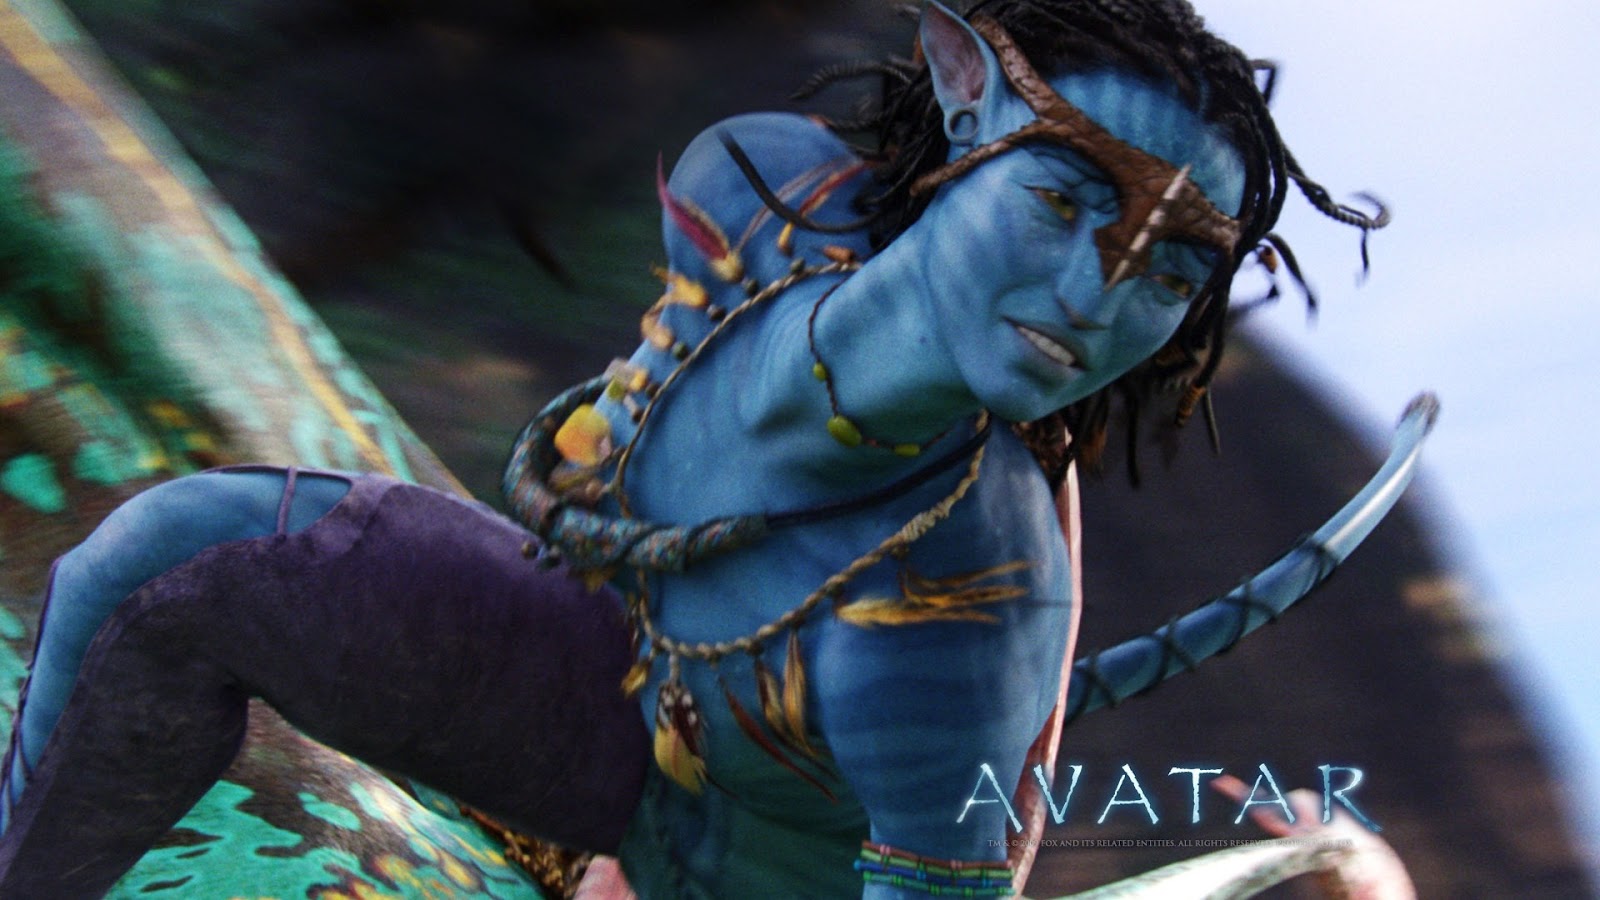 Avatar Wallpapers in HD  1080p Wallpaper Store for Desktop screen 1600x900